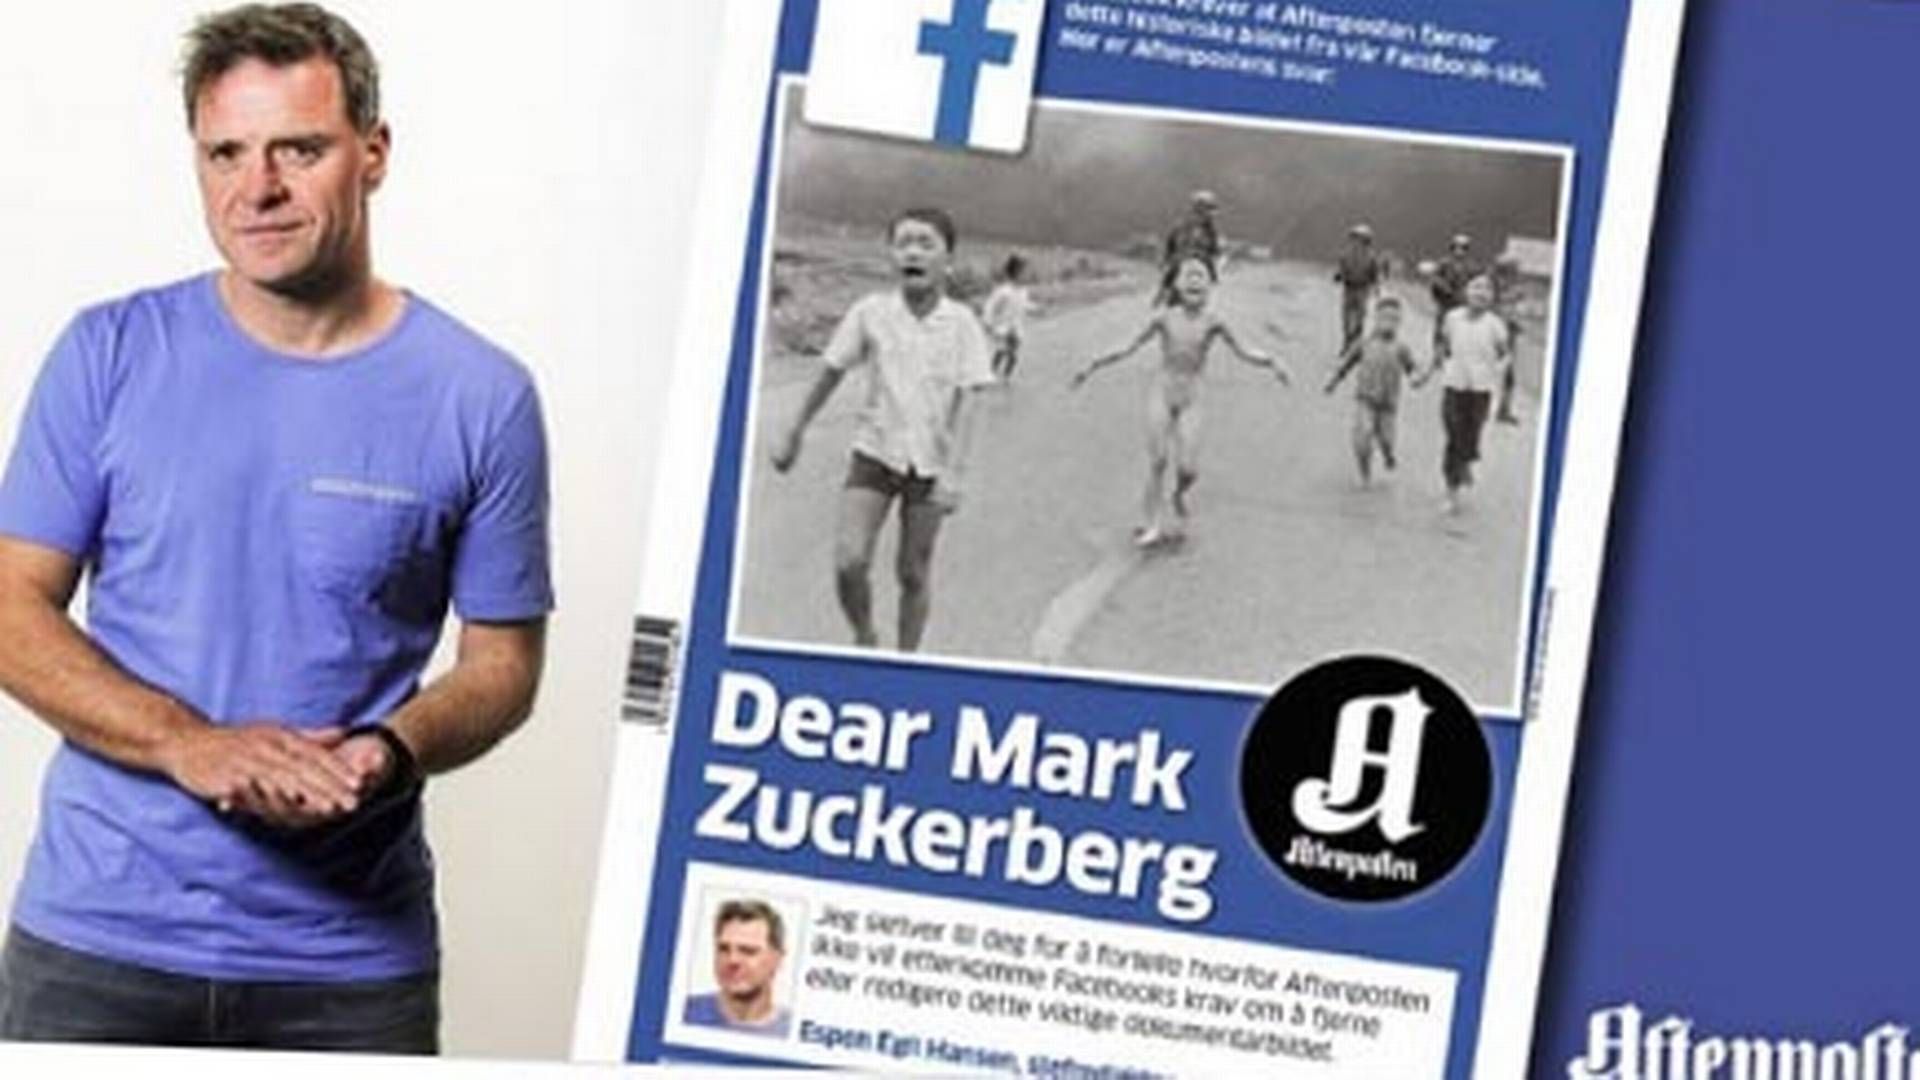 Foto: Screenshot af Aftenpostens chefredaktør Espen Egil Hansens opråb til Mark Zuckerberg